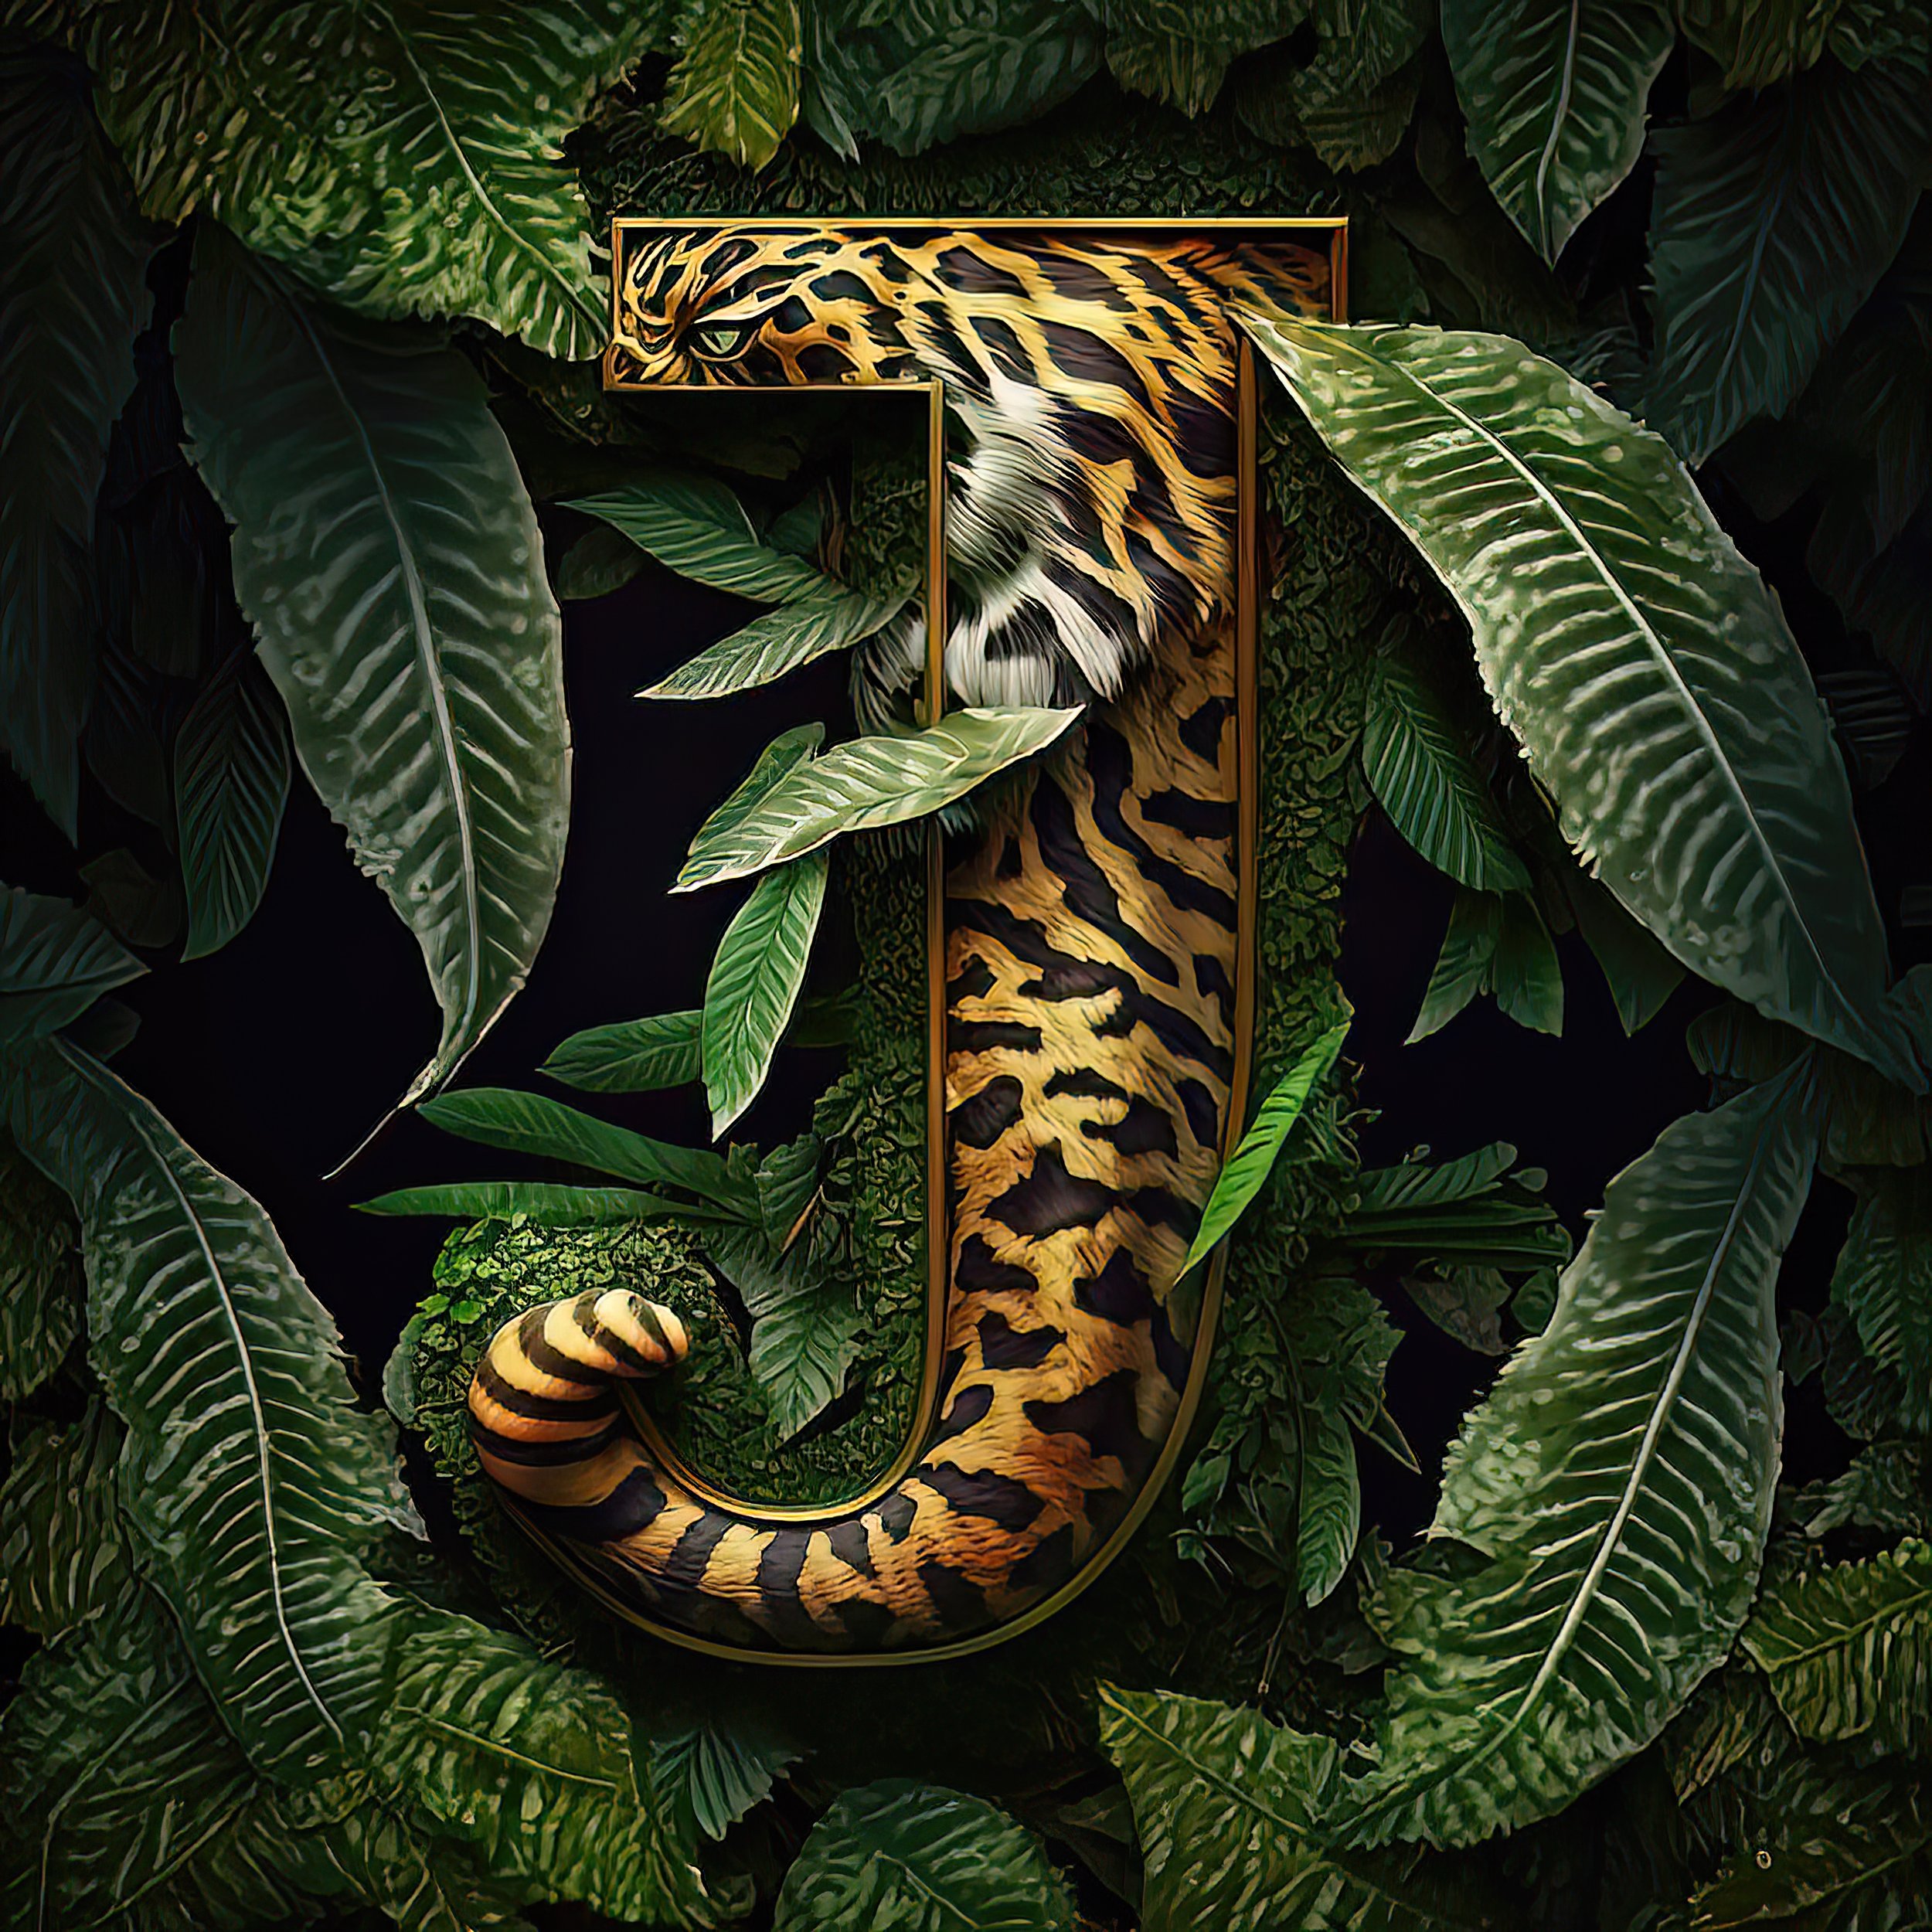 j is for jungle cat-DeNoiseAI-low-light-SharpenAI-Motion-gigapixel-standard-scale-4_00x.jpg